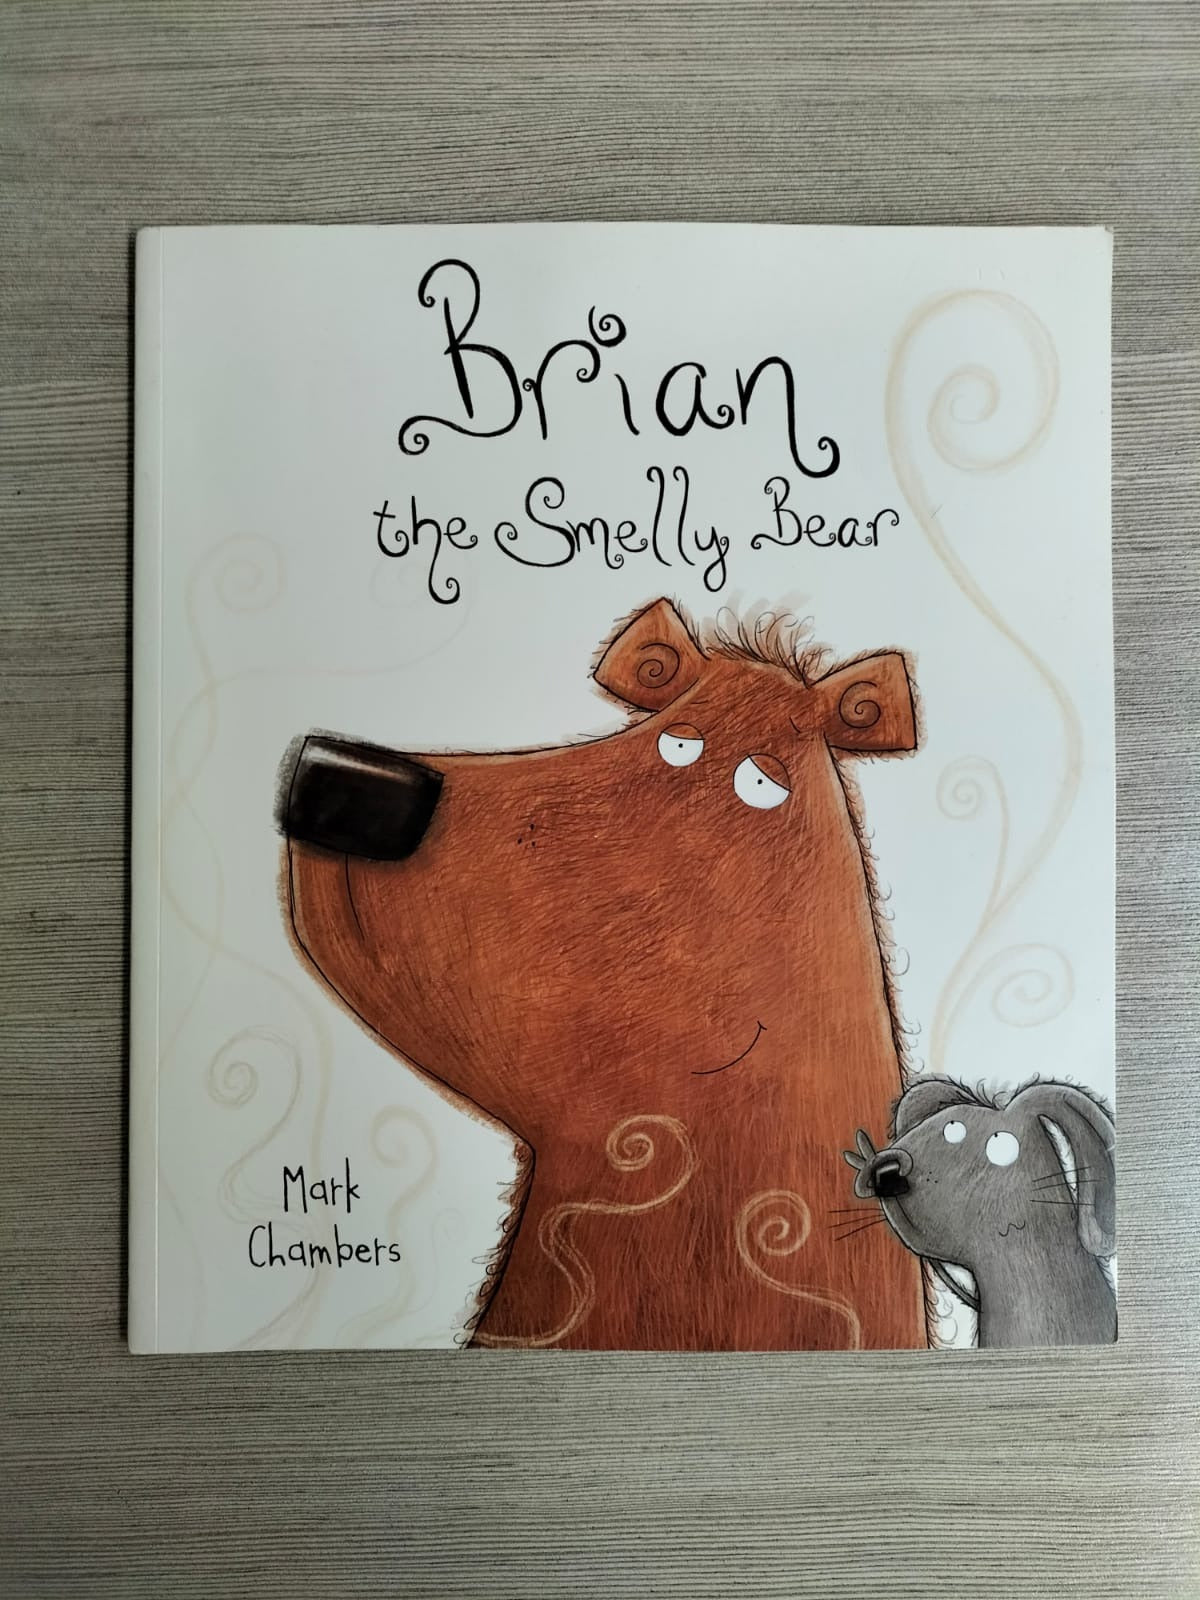 Brian The Smelly Bear (Pre-loved Book)